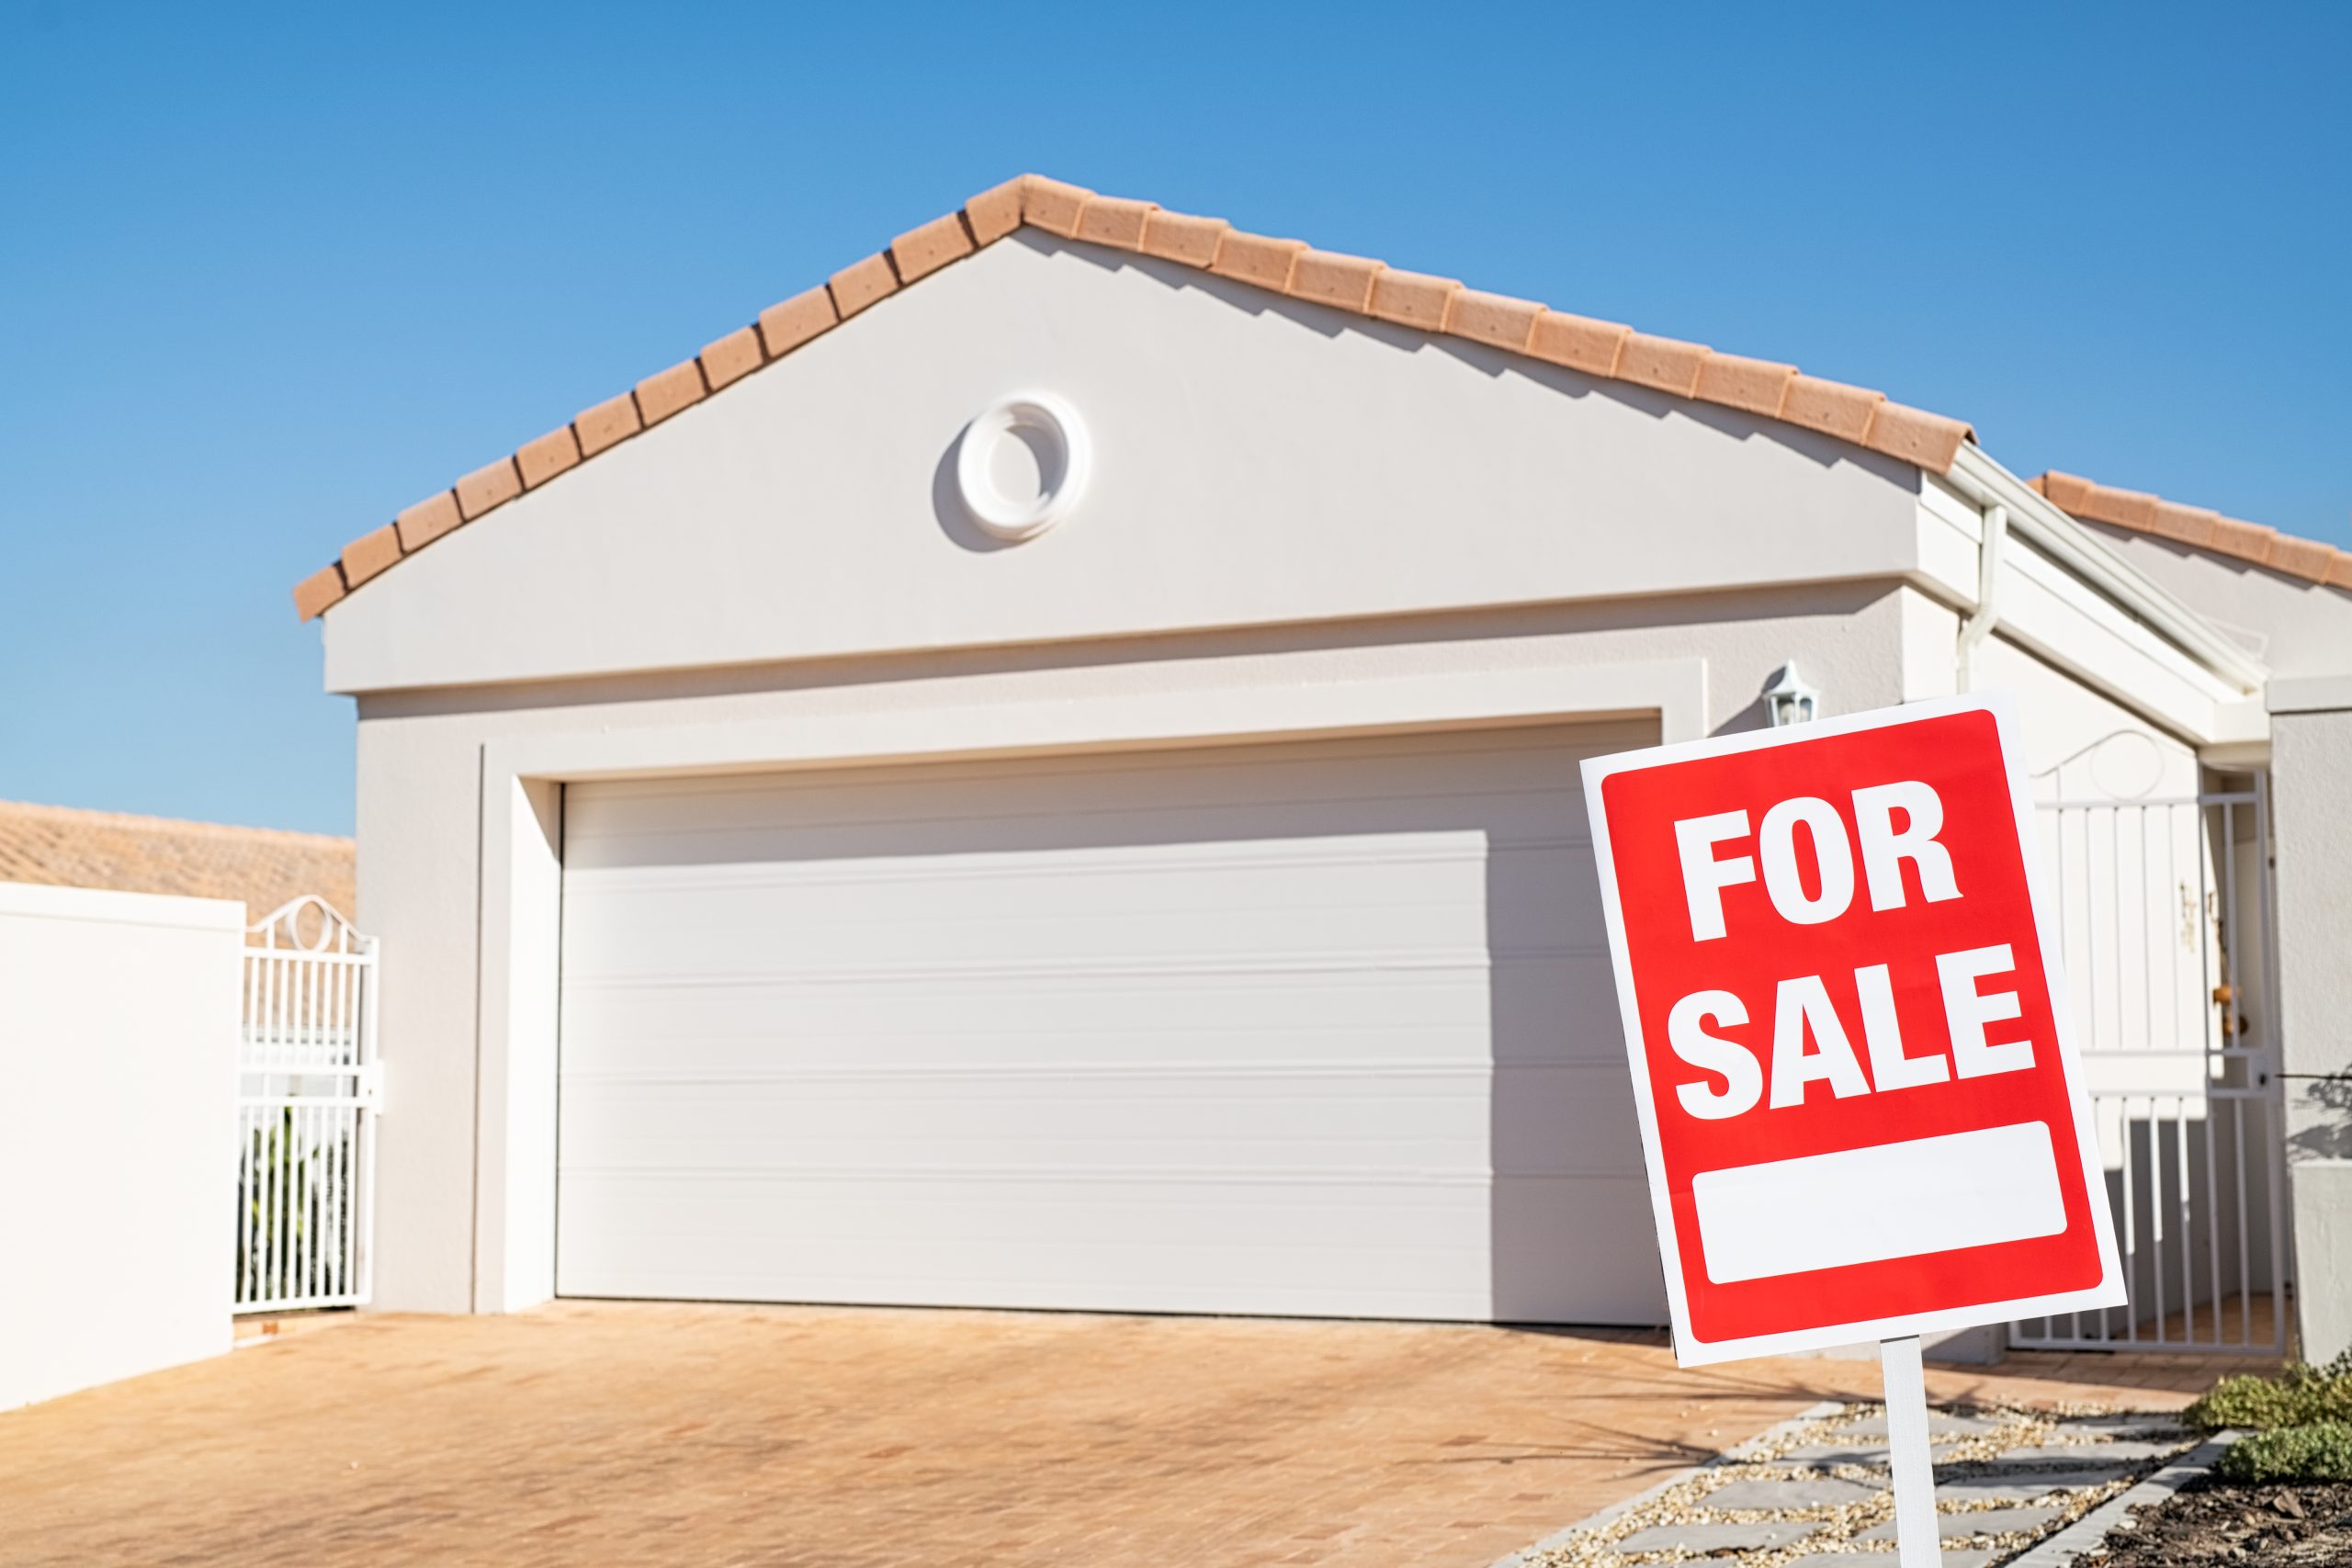 miami home for sale | miami housing market